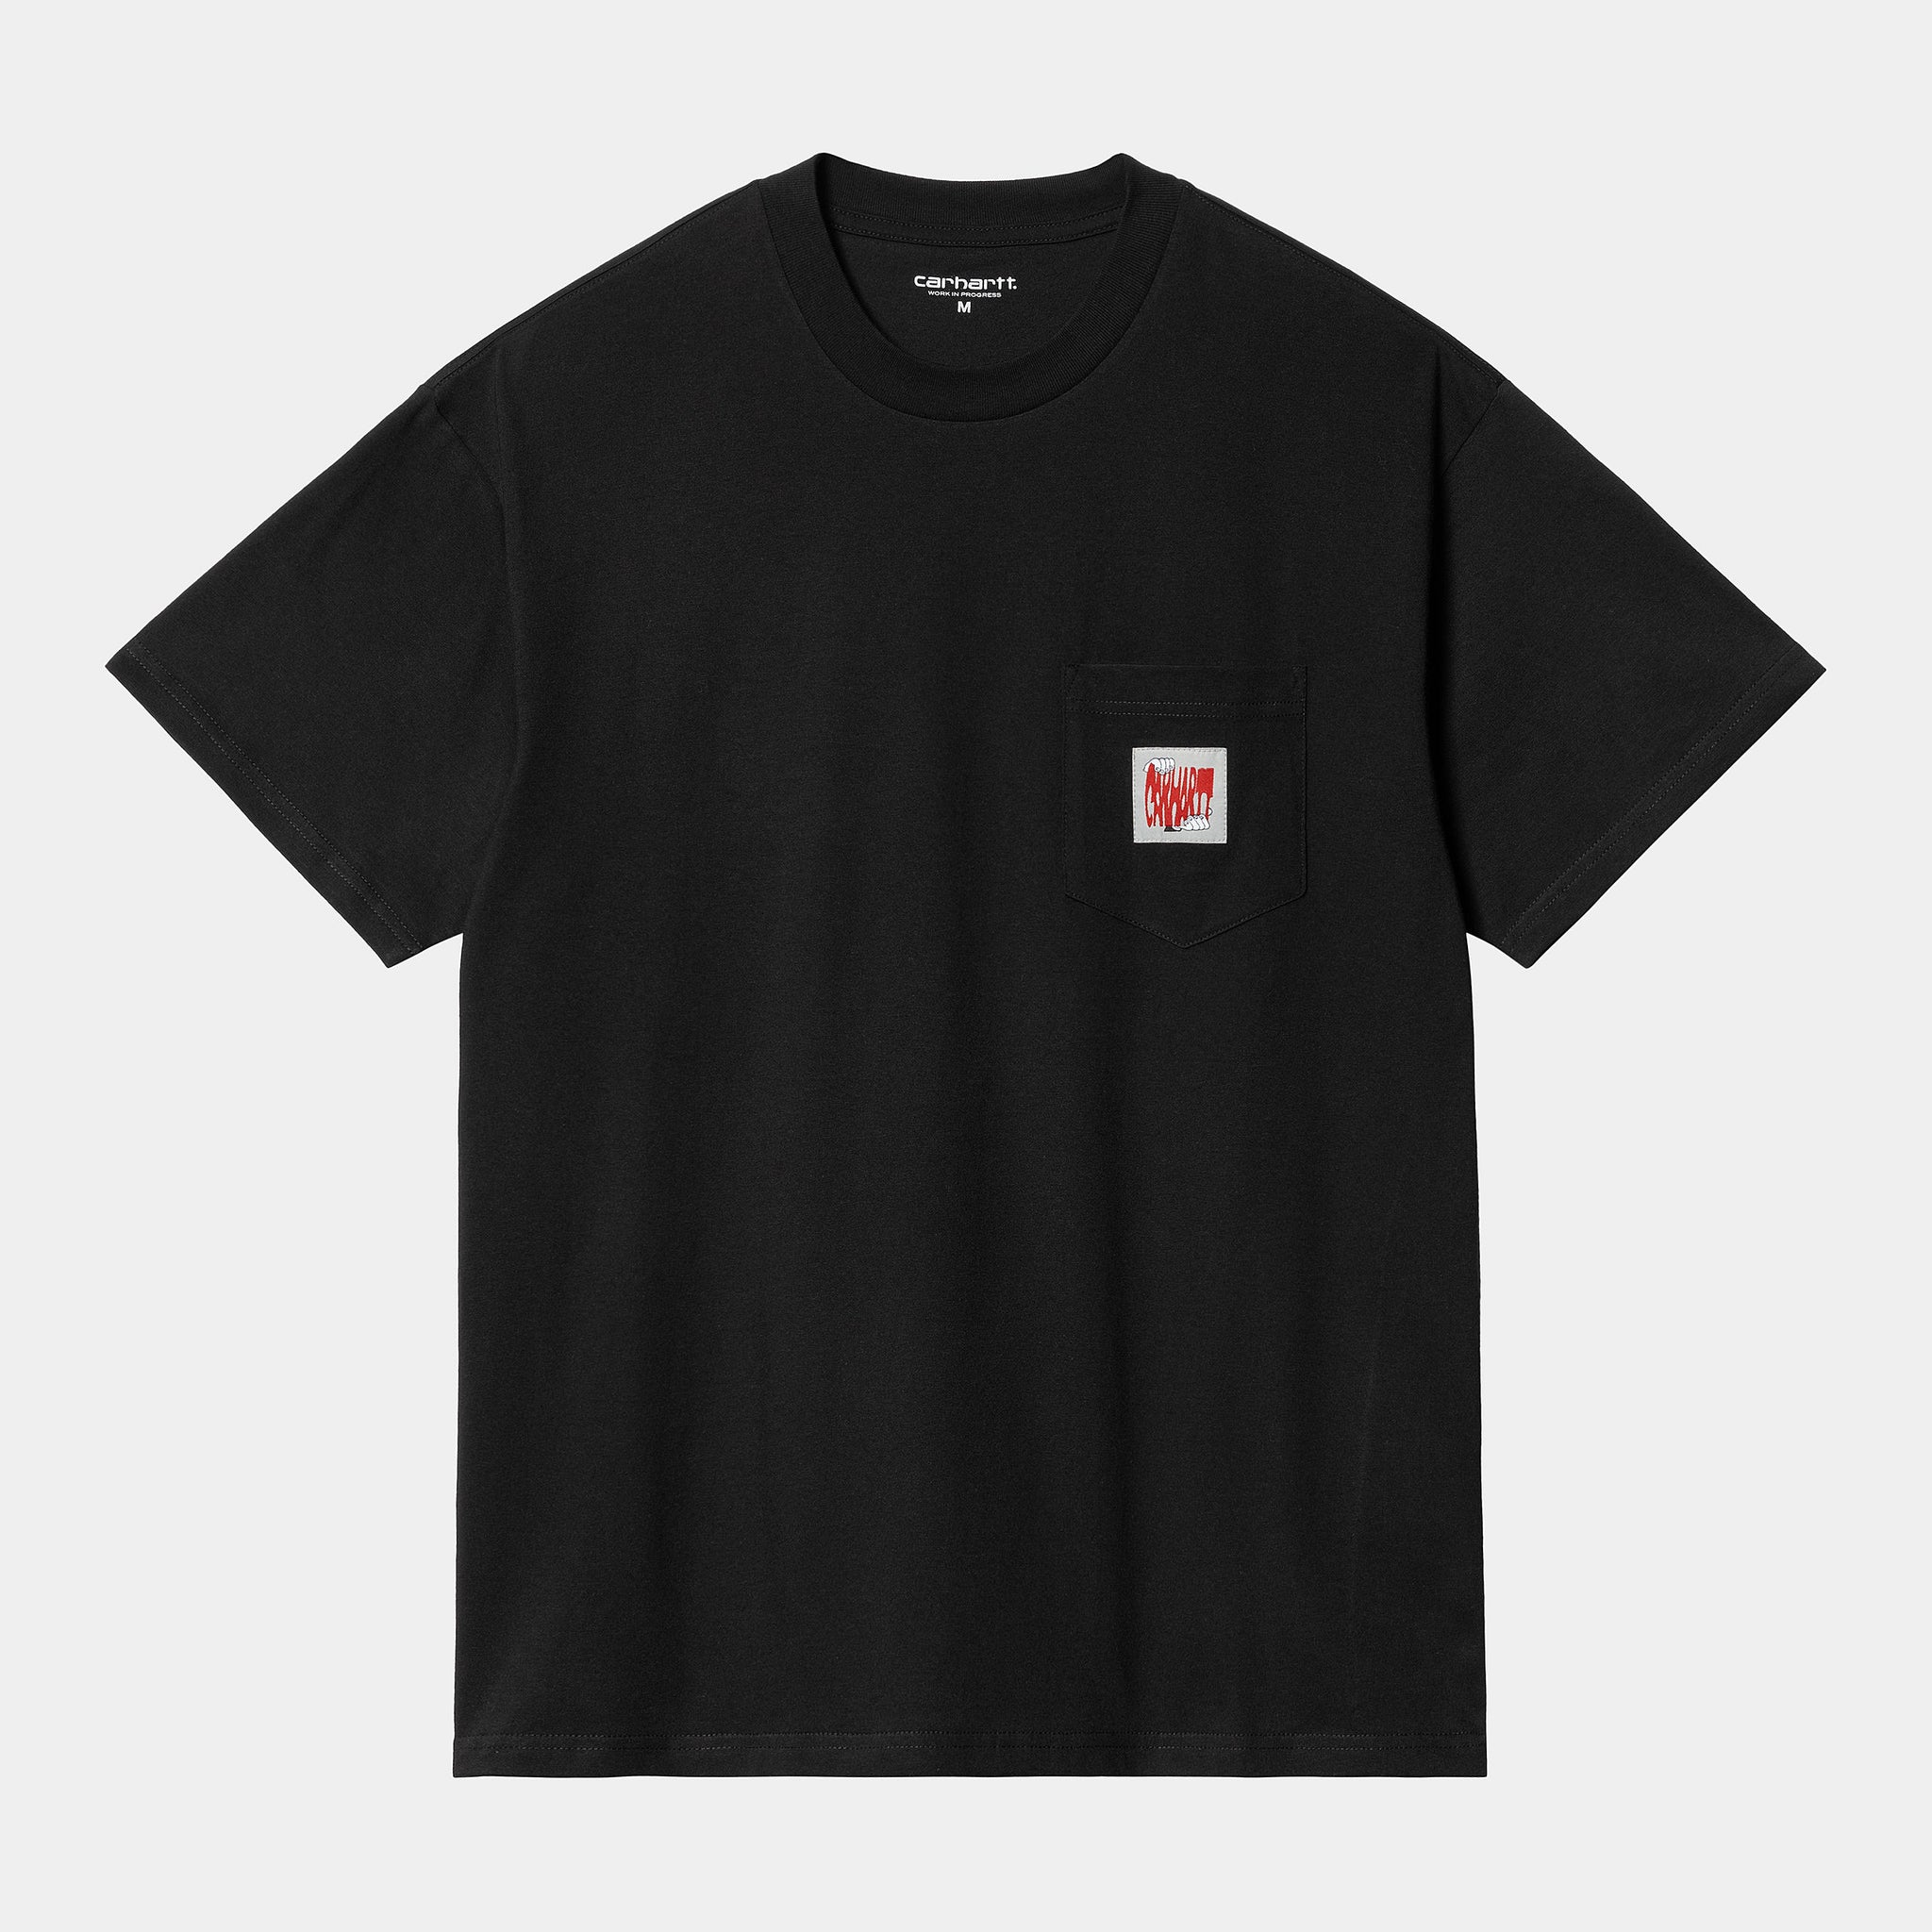 S/S Stretch Pocket T-shirt Cotton Single Jersey, 150 G/m² (Black)